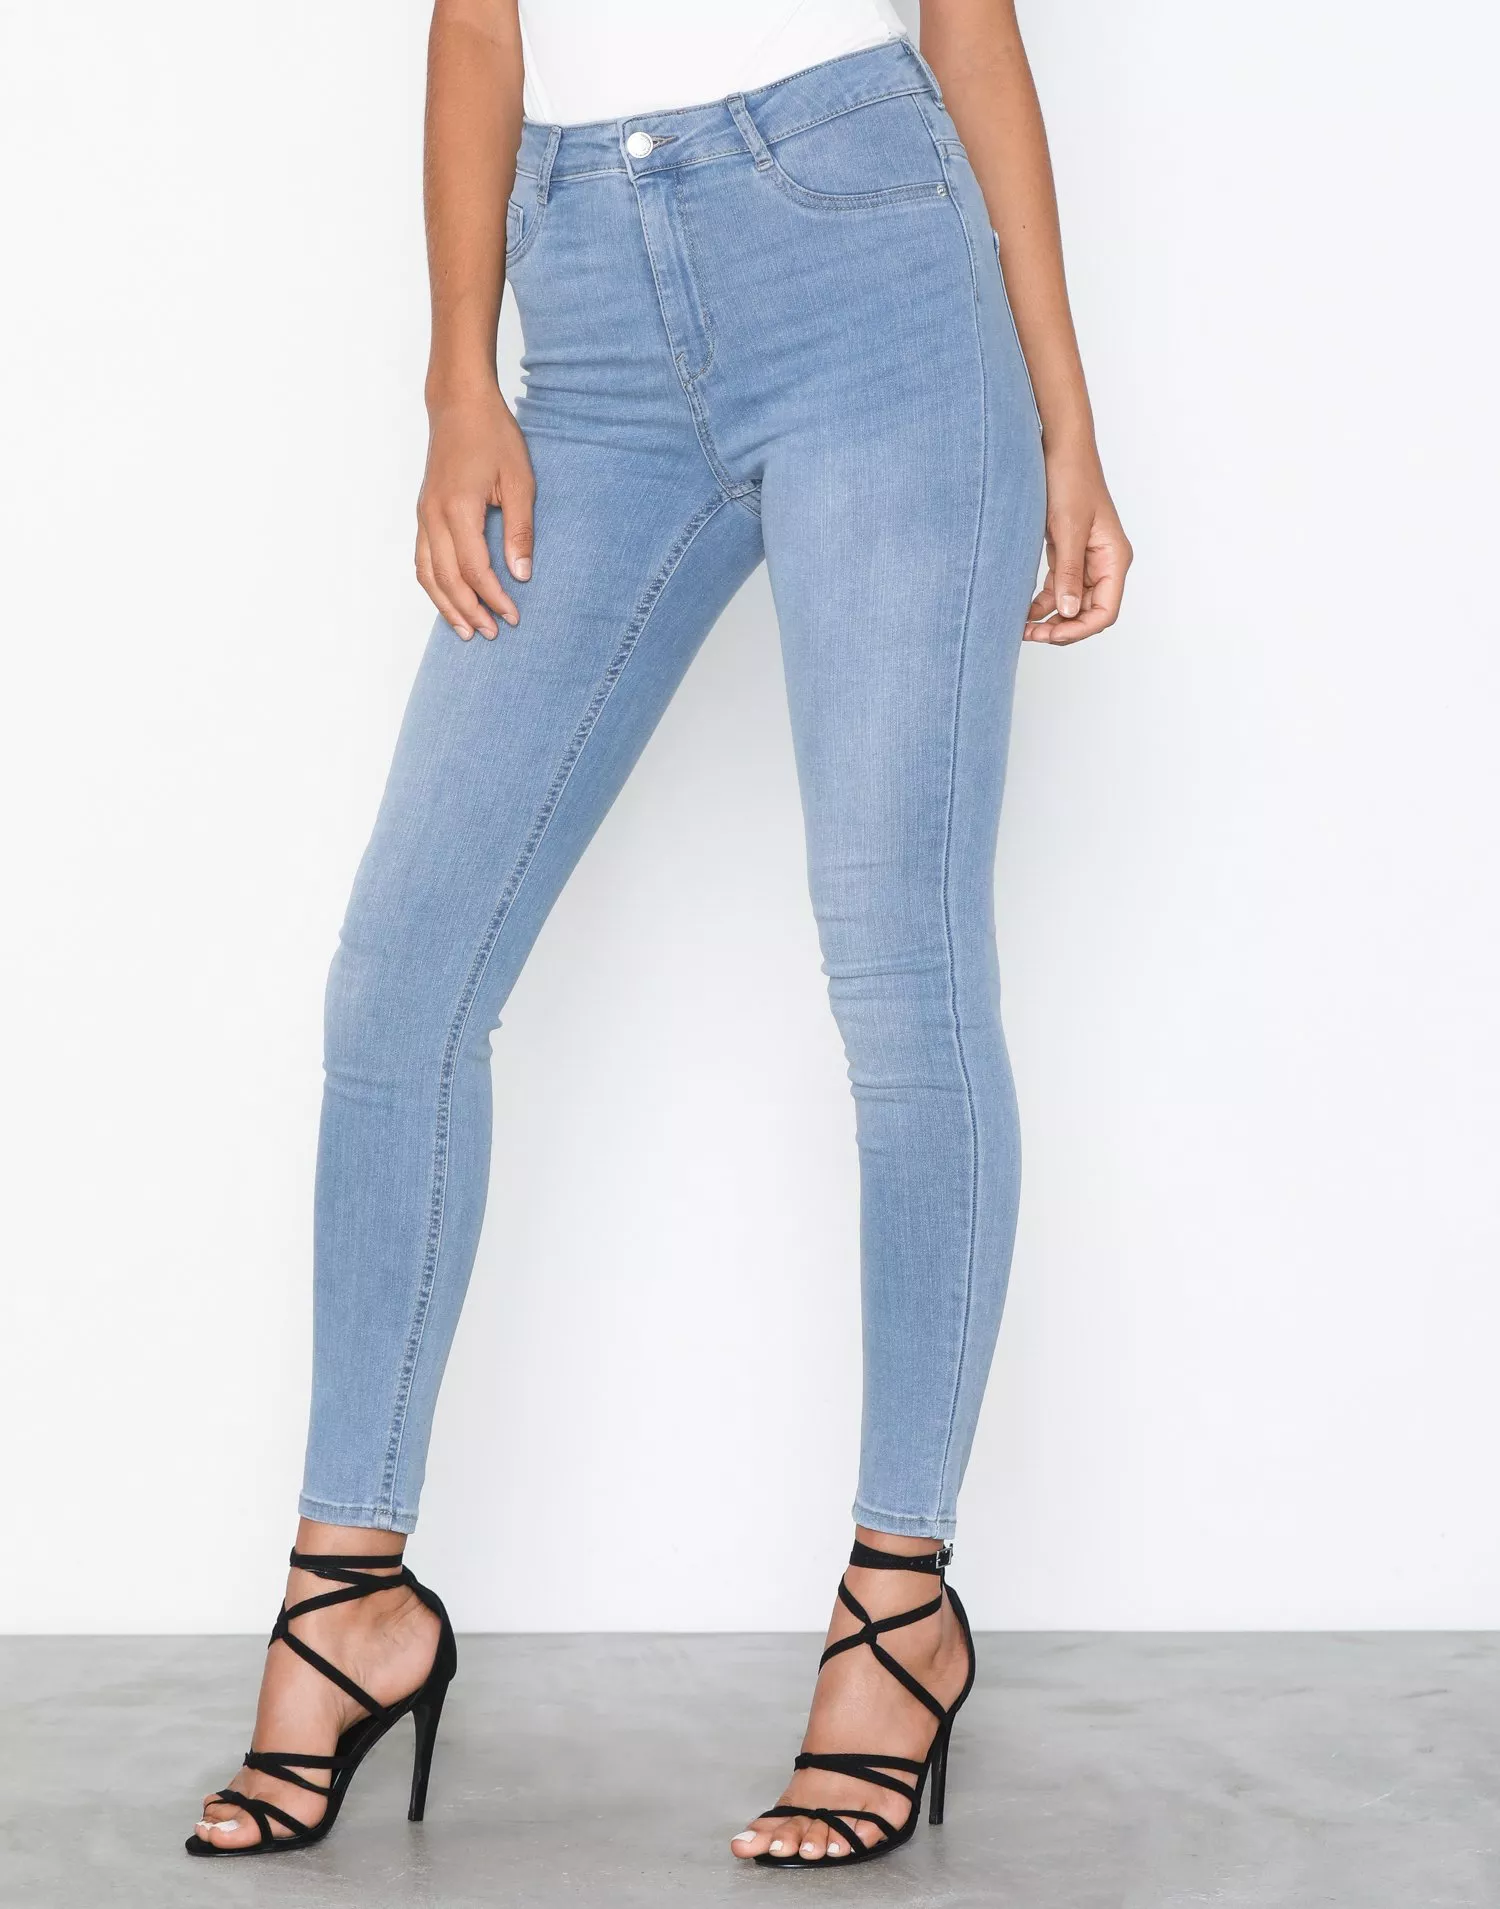 Buy Gina Molly Waist Jeans - Light Blue Nelly.com